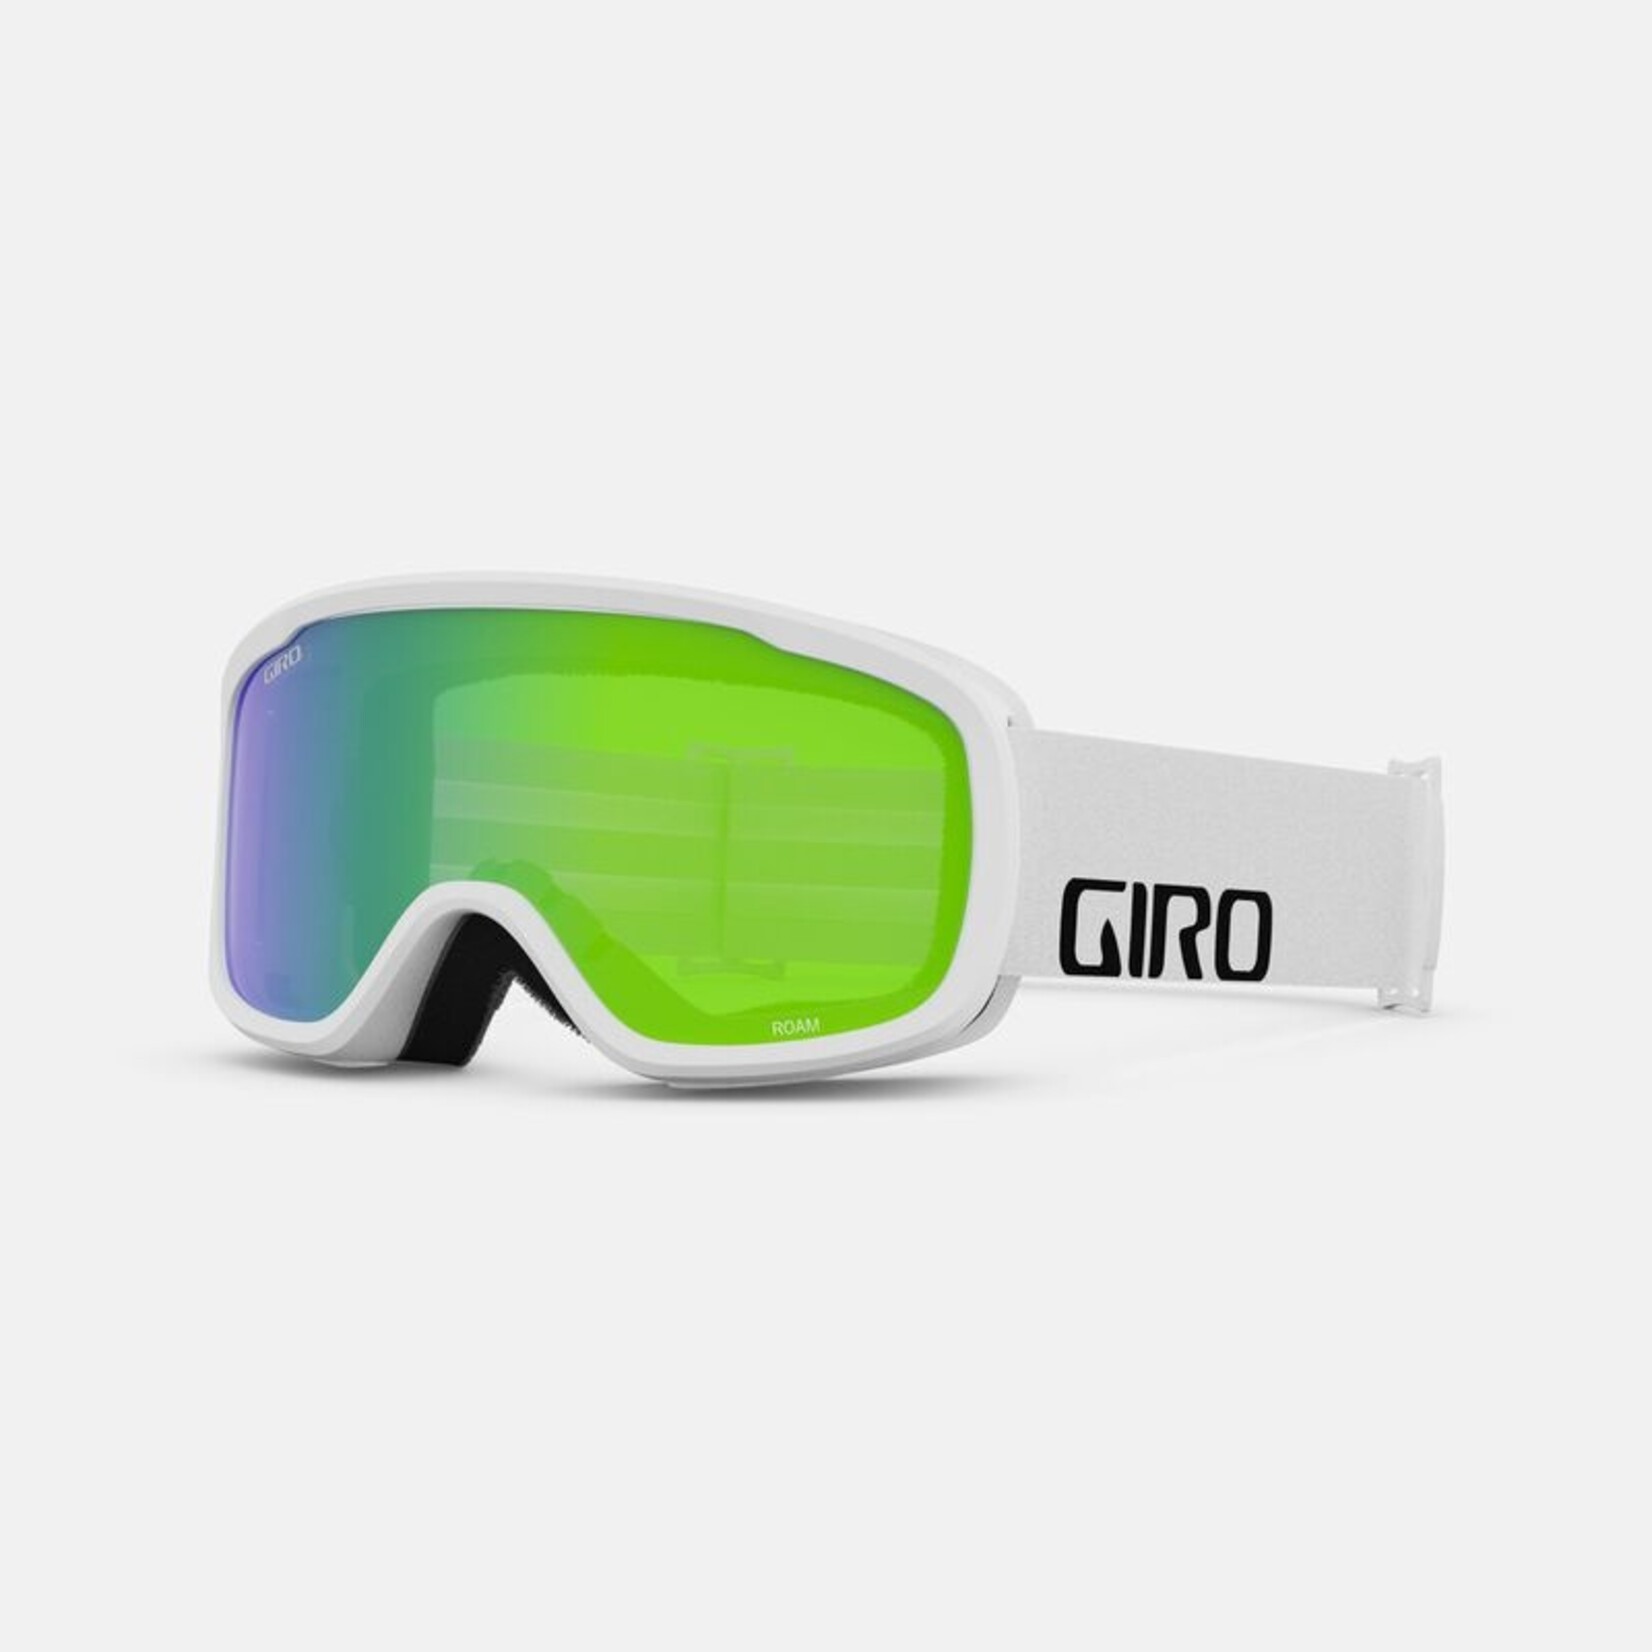 GIRO Roam Asian Fit Goggle